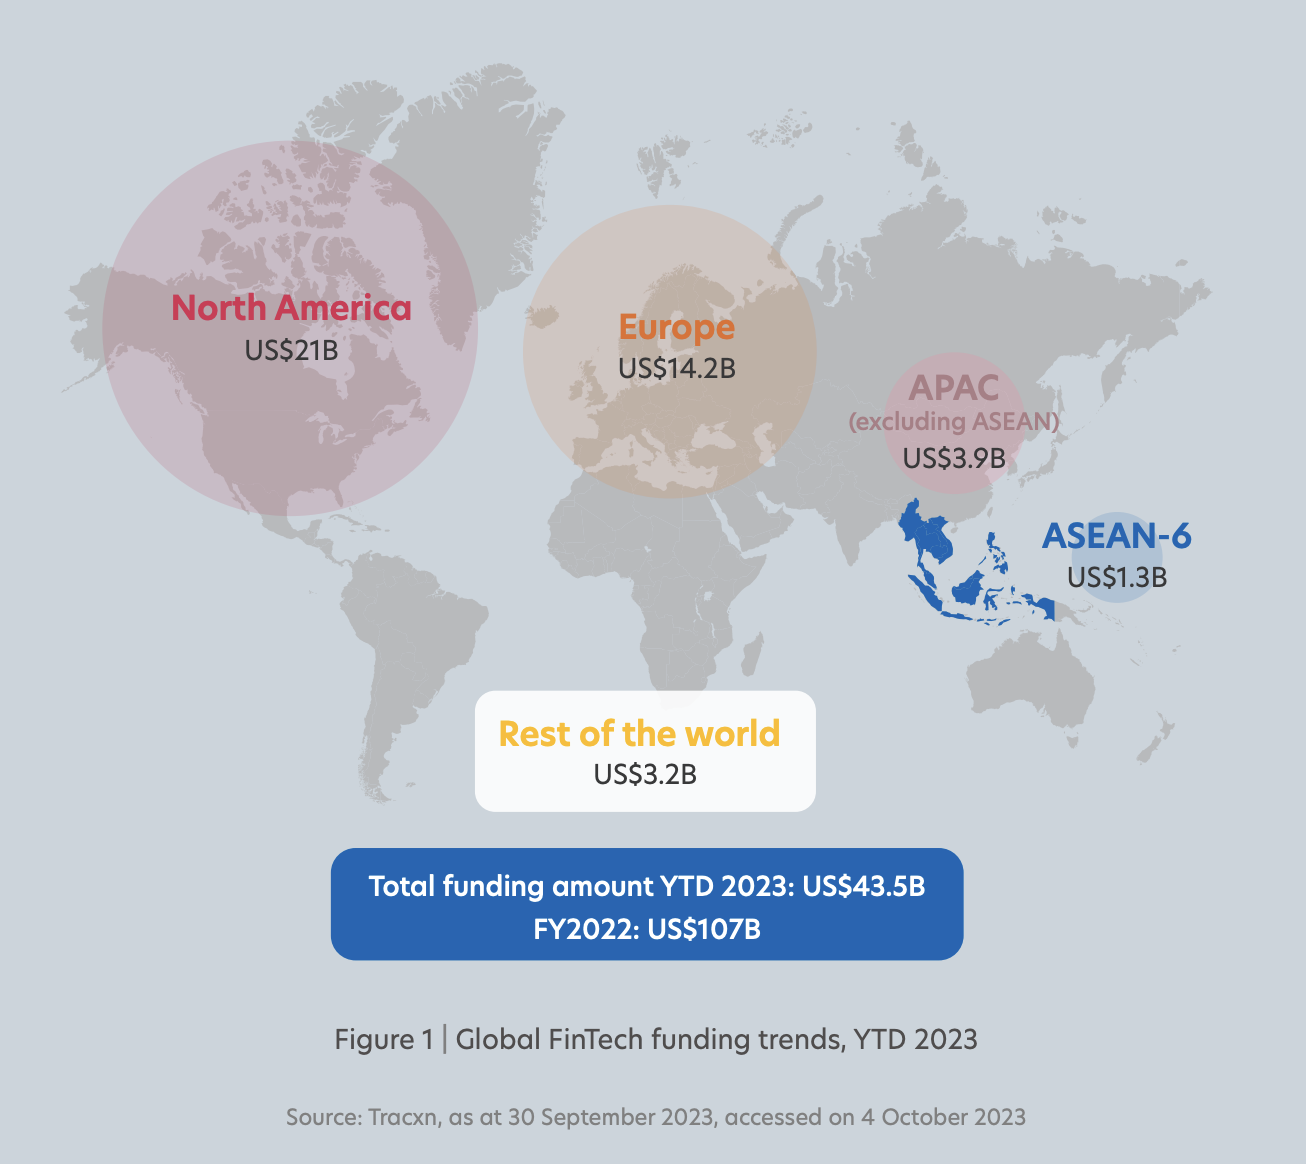 Globaalit finrech-rahoitustrendit, YTD 2023, Lähde: Fintech in ASEAN 2023: Seeding the Green Transition, UOB, PwC Singapore ja Singapore Fintech Association (SFA), marraskuu 2023